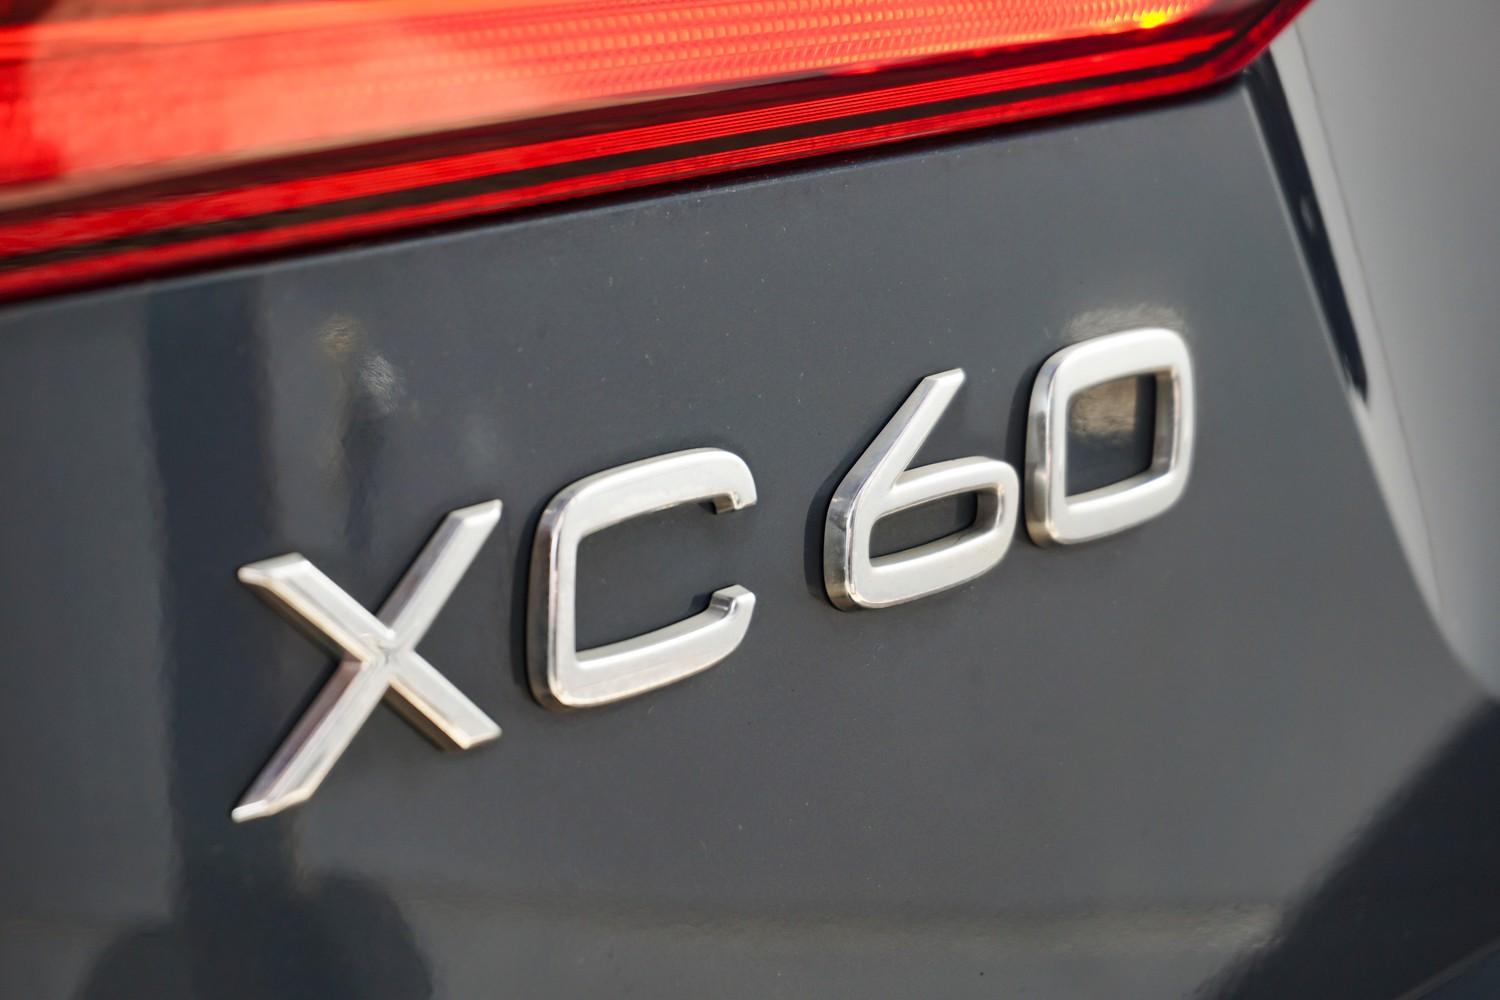 2019 MY20 Volvo XC60  D4 Inscription SUV Image 20